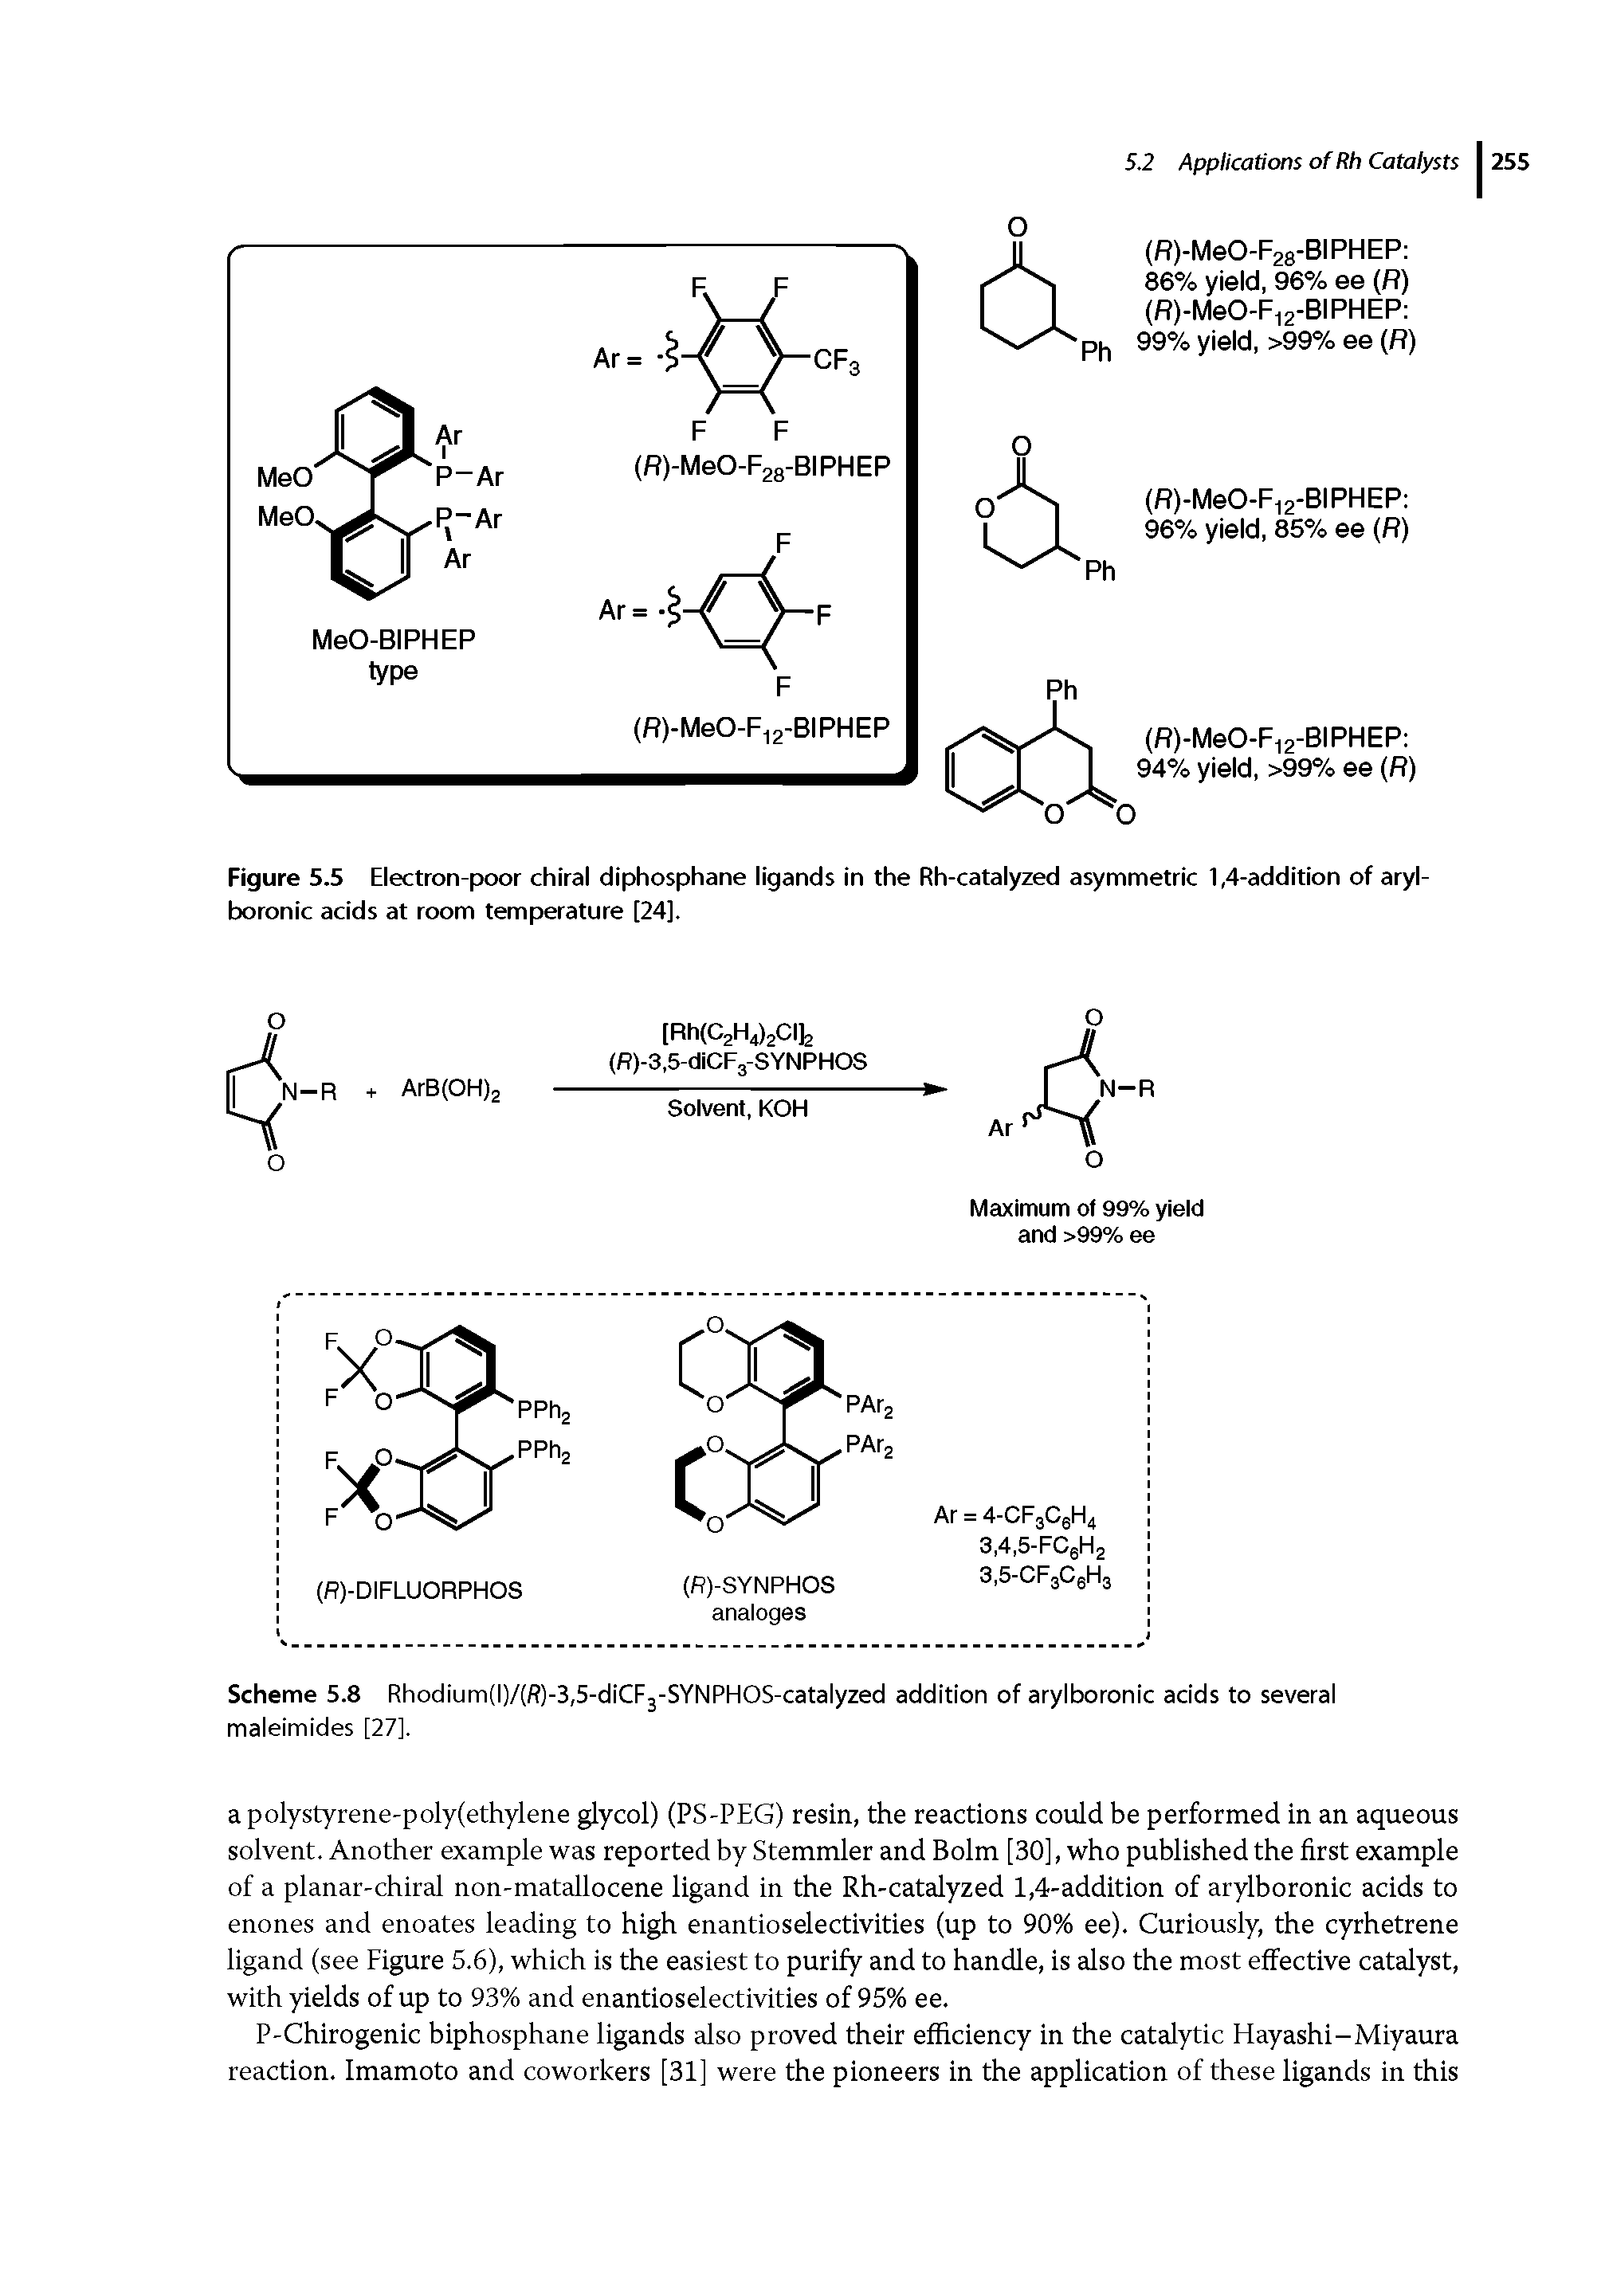 Scheme 5.8 Rhodium(l)/(fl)-3,5-diCF3-SYNPFIOS-catalyzed addition of arylboronic acids to several maleimides [27].